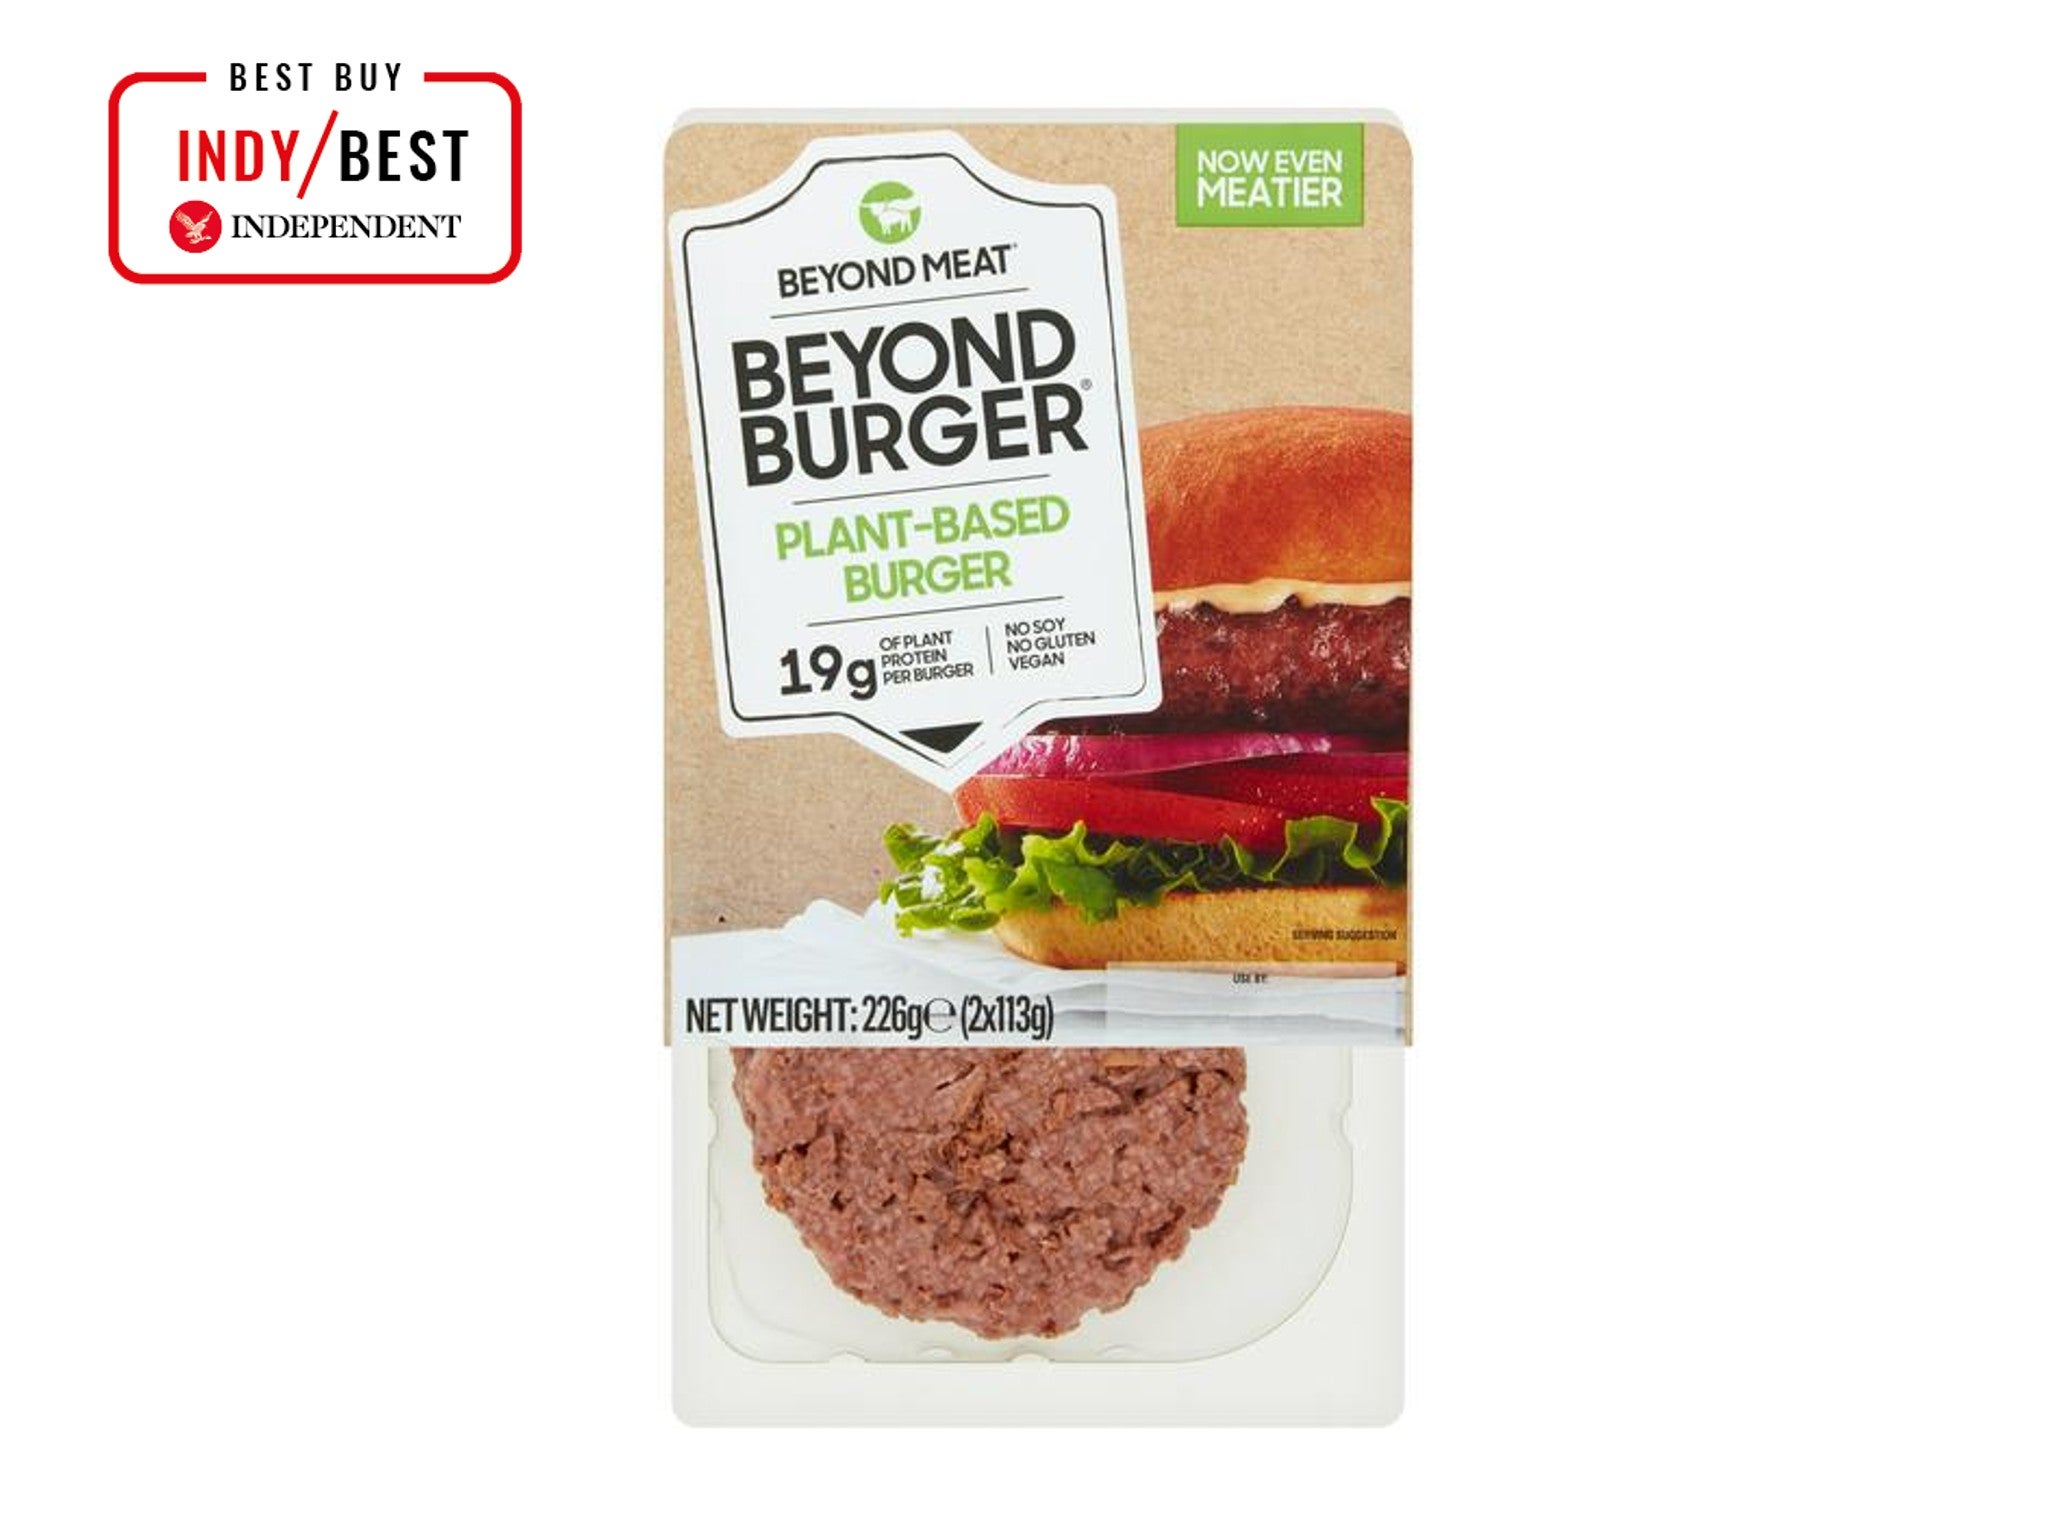 Beyond Meat burger indybest.jpg